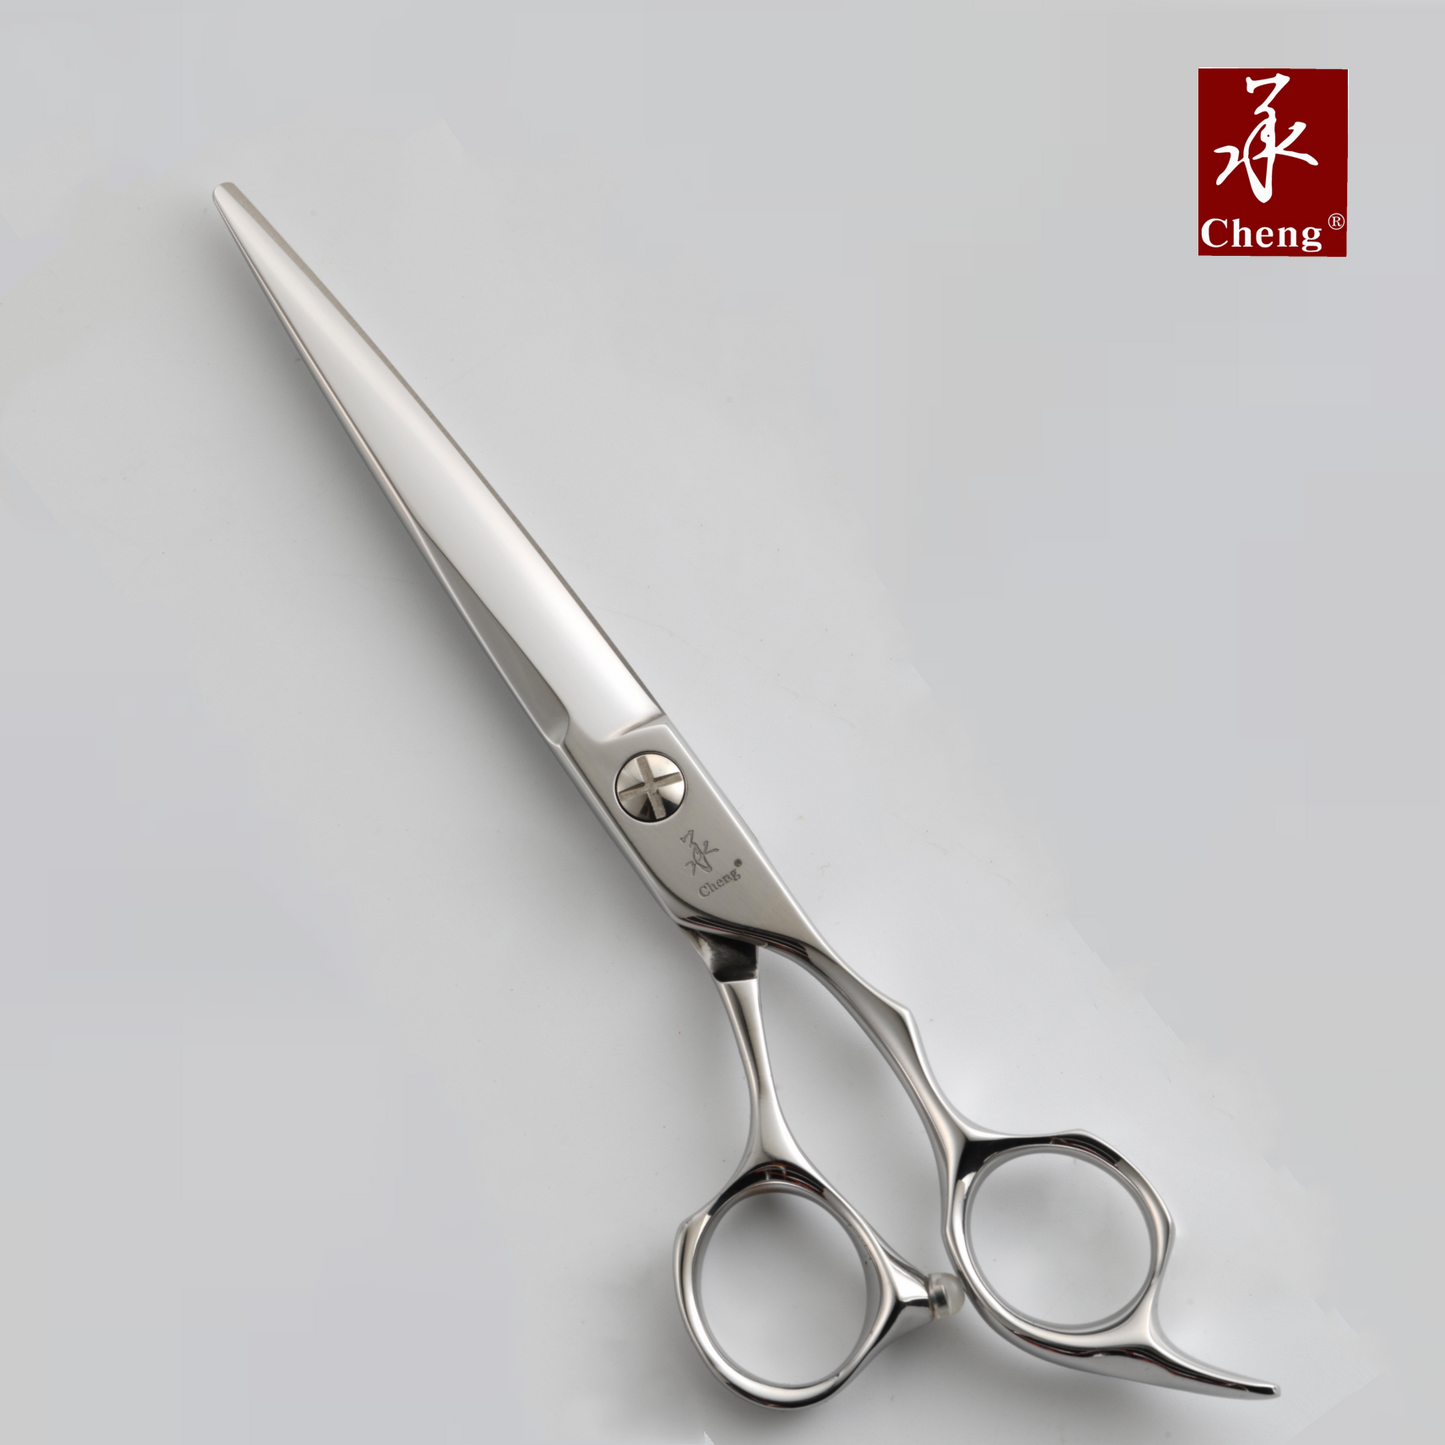 AAD-6.3K Hair Cutting Scissors 6.3 Inch